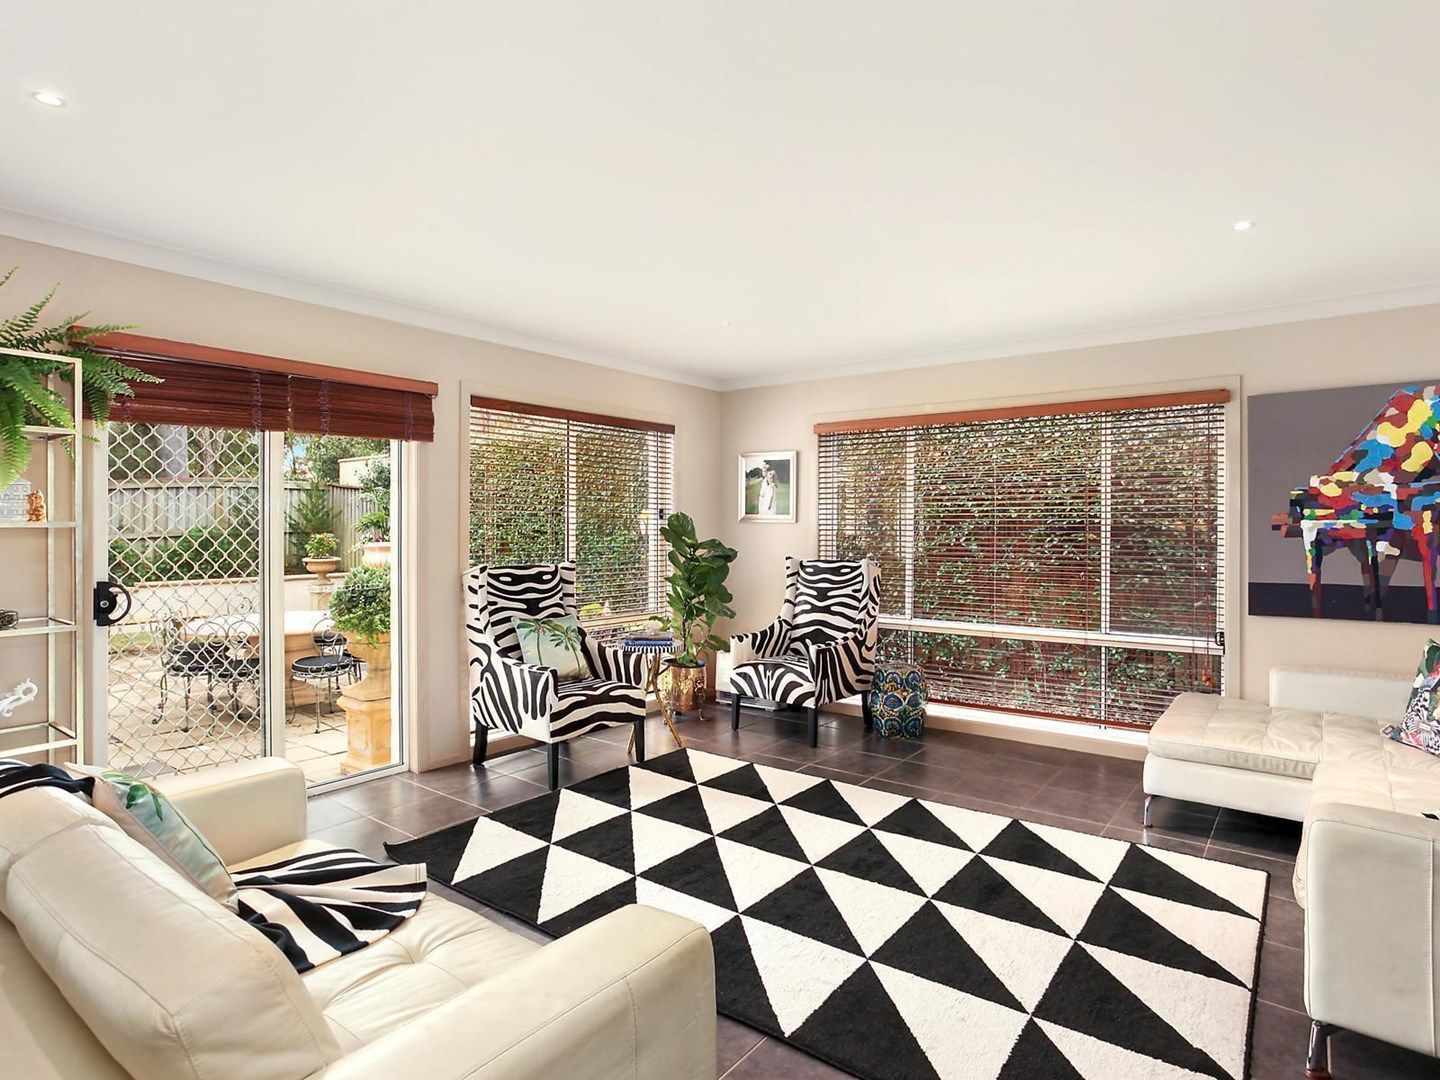 5 bedrooms House in 4 Fraser Avenue KELLYVILLE NSW, 2155